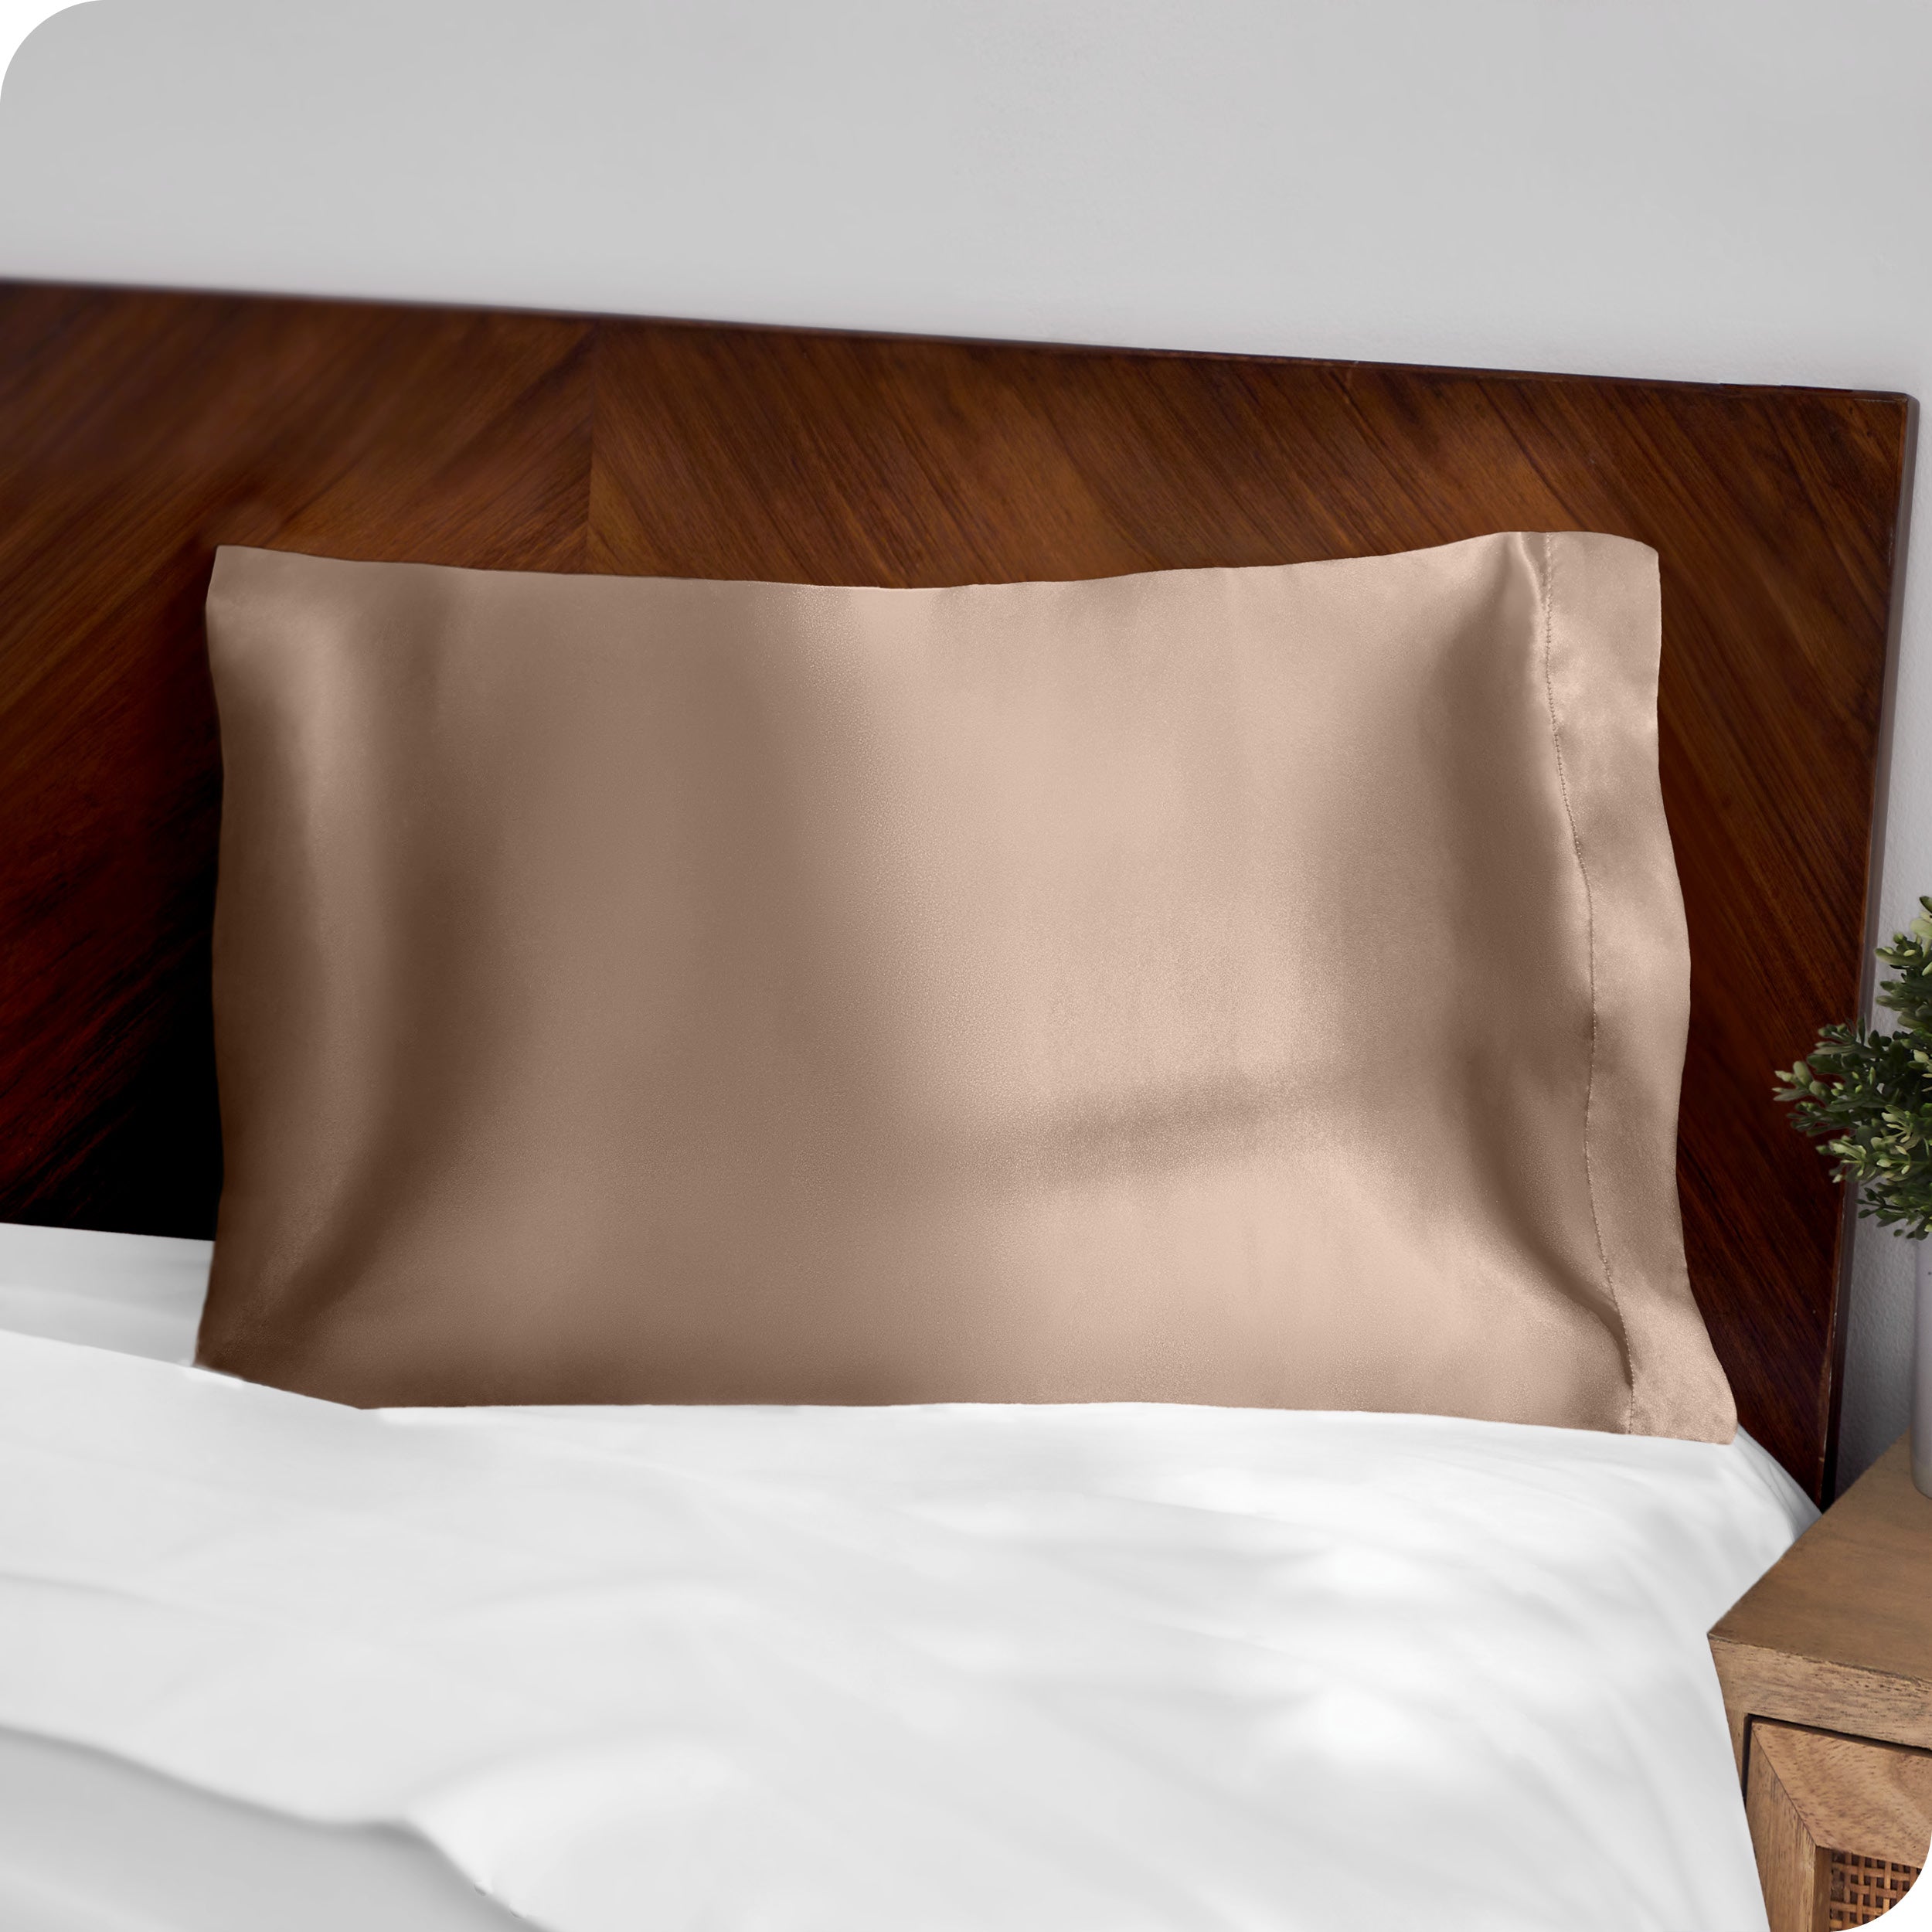 A brown silk pillowcase on a pillow resting on a headboard